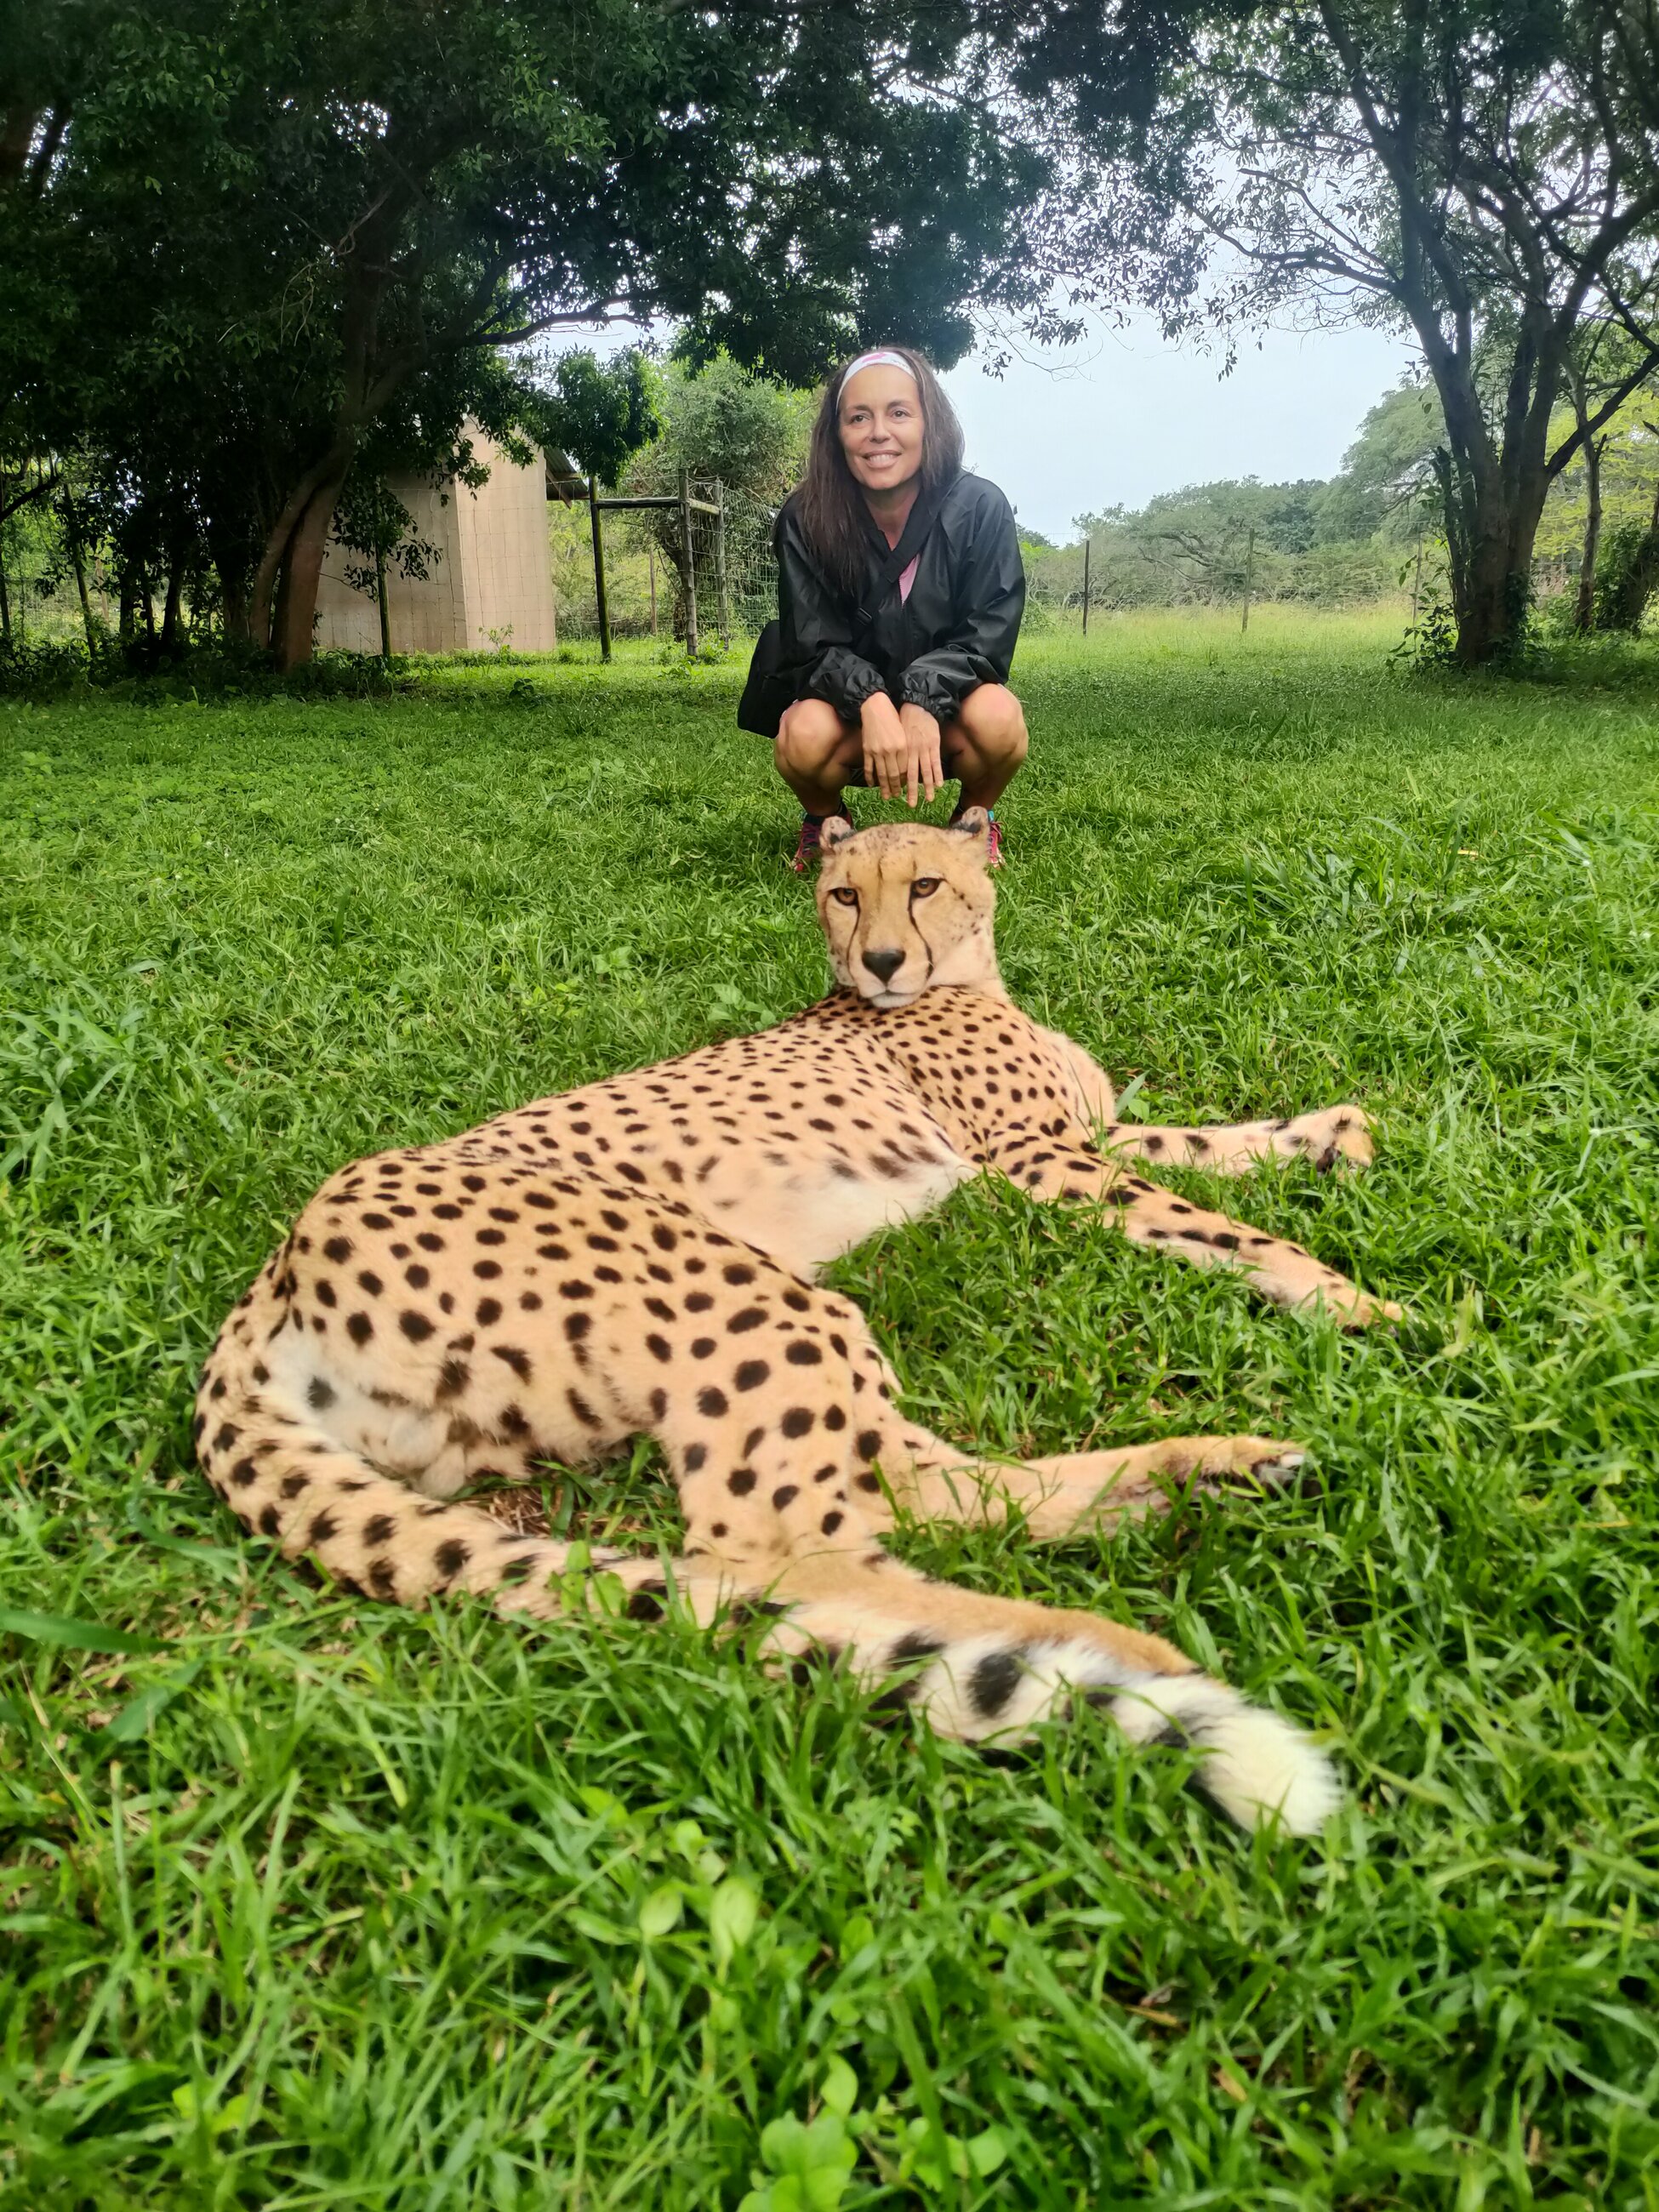 Cheetah and I